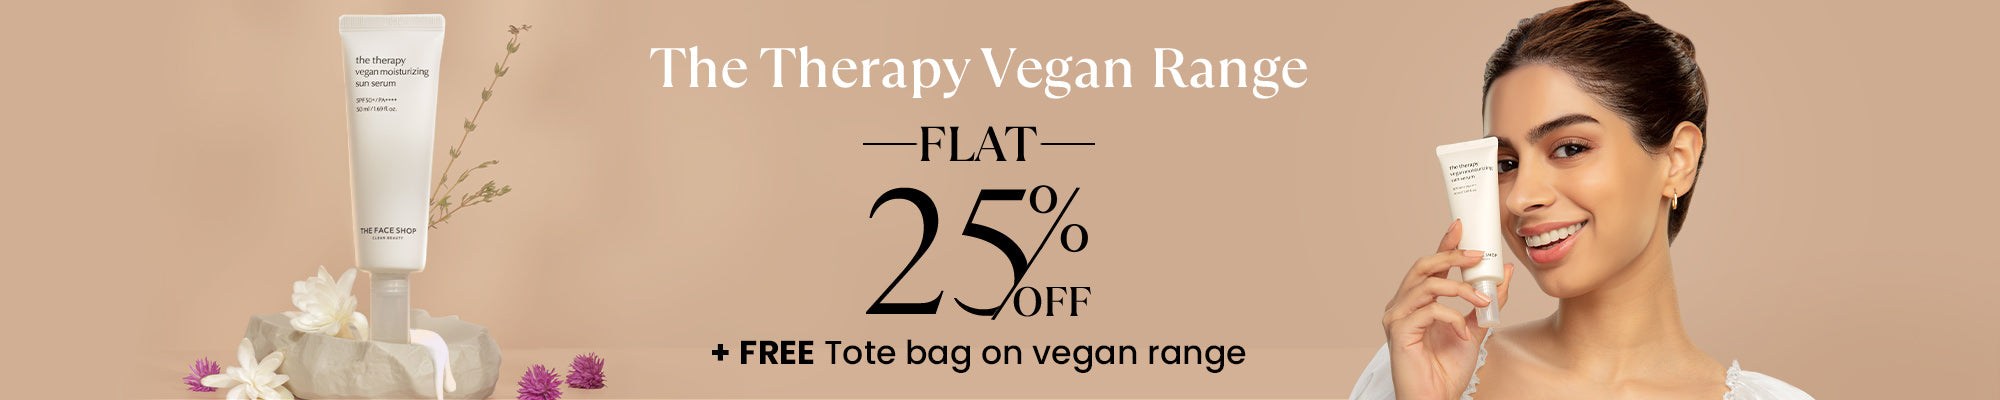 The Therapy Vegan Range